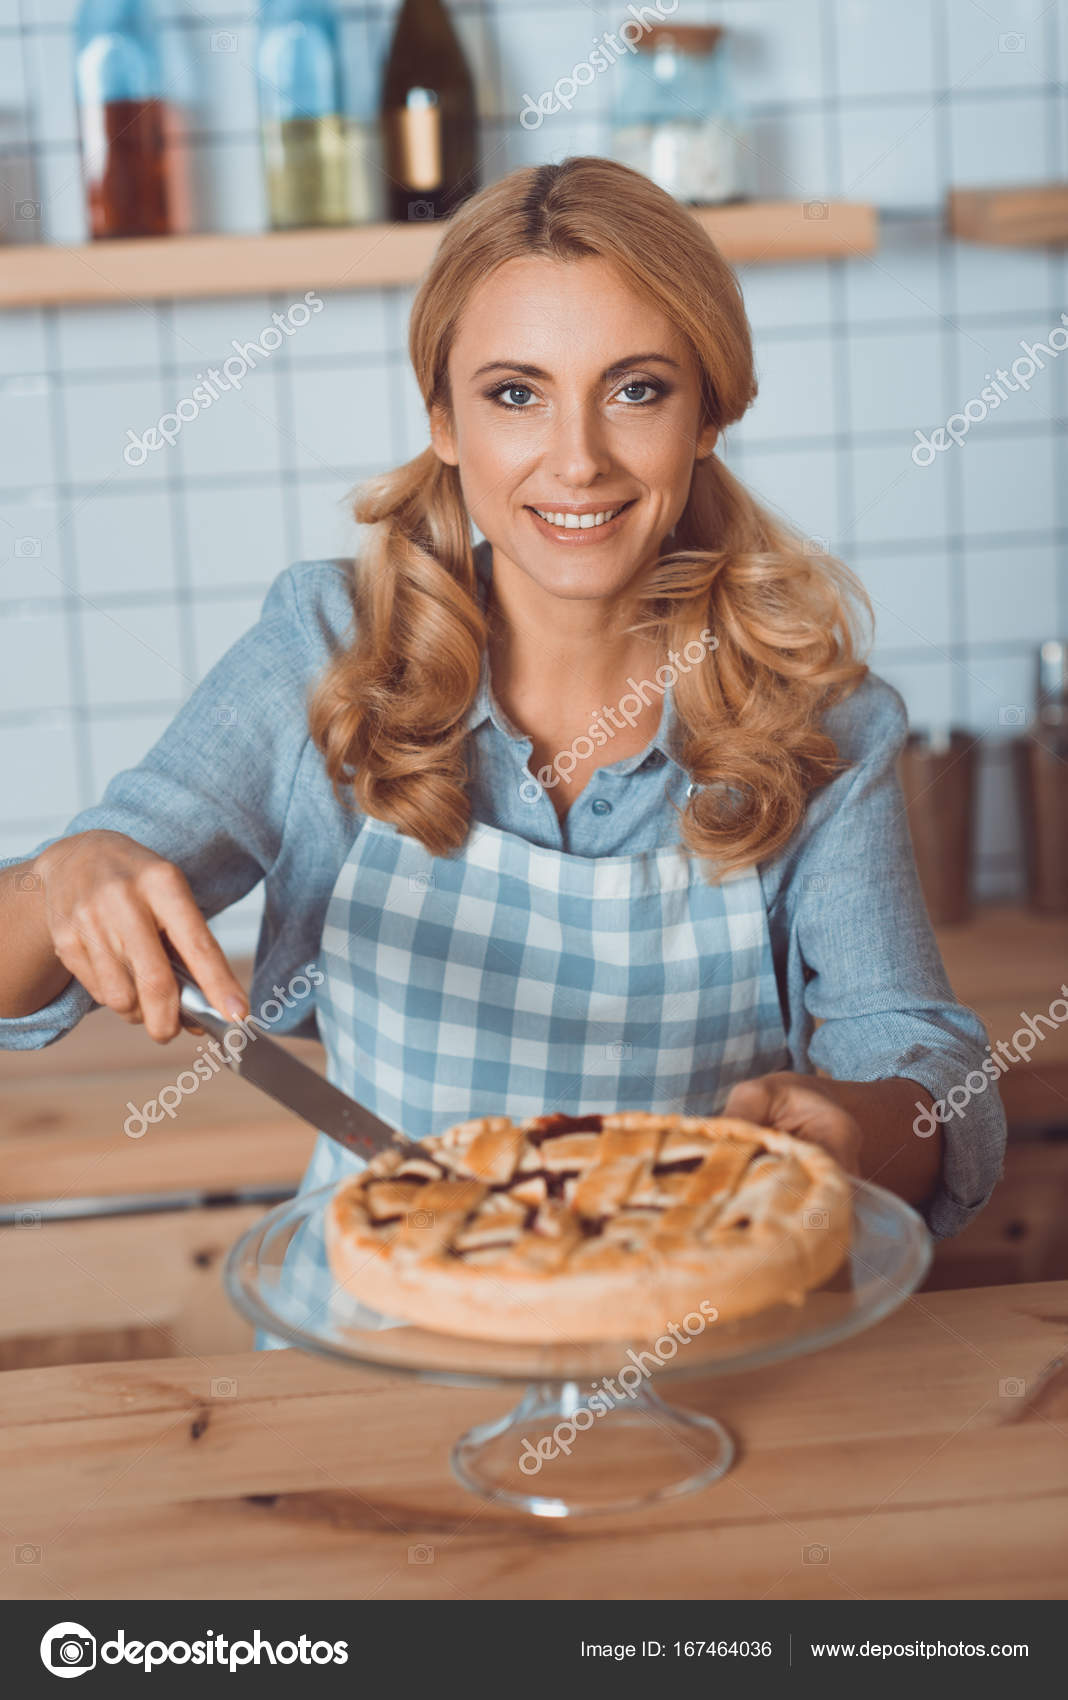 Waitress cutting pie — Stock Photo © AllaSerebrina 167464036